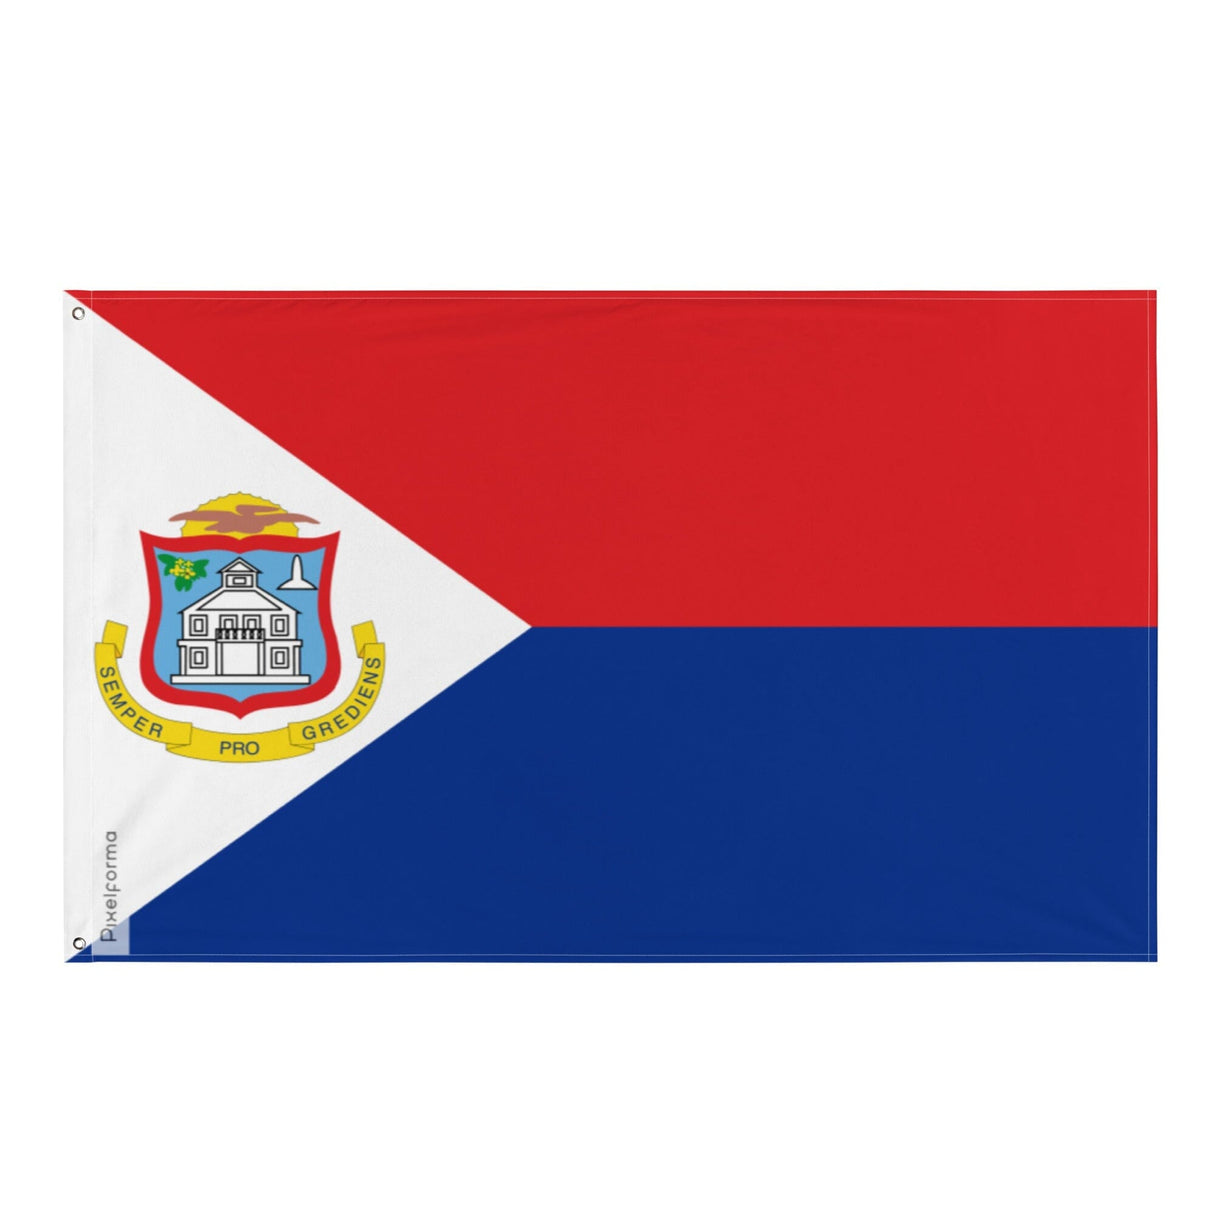 St. Maarten Flag in Multiple Sizes 100% Polyester Print with Double Hem - Pixelforma